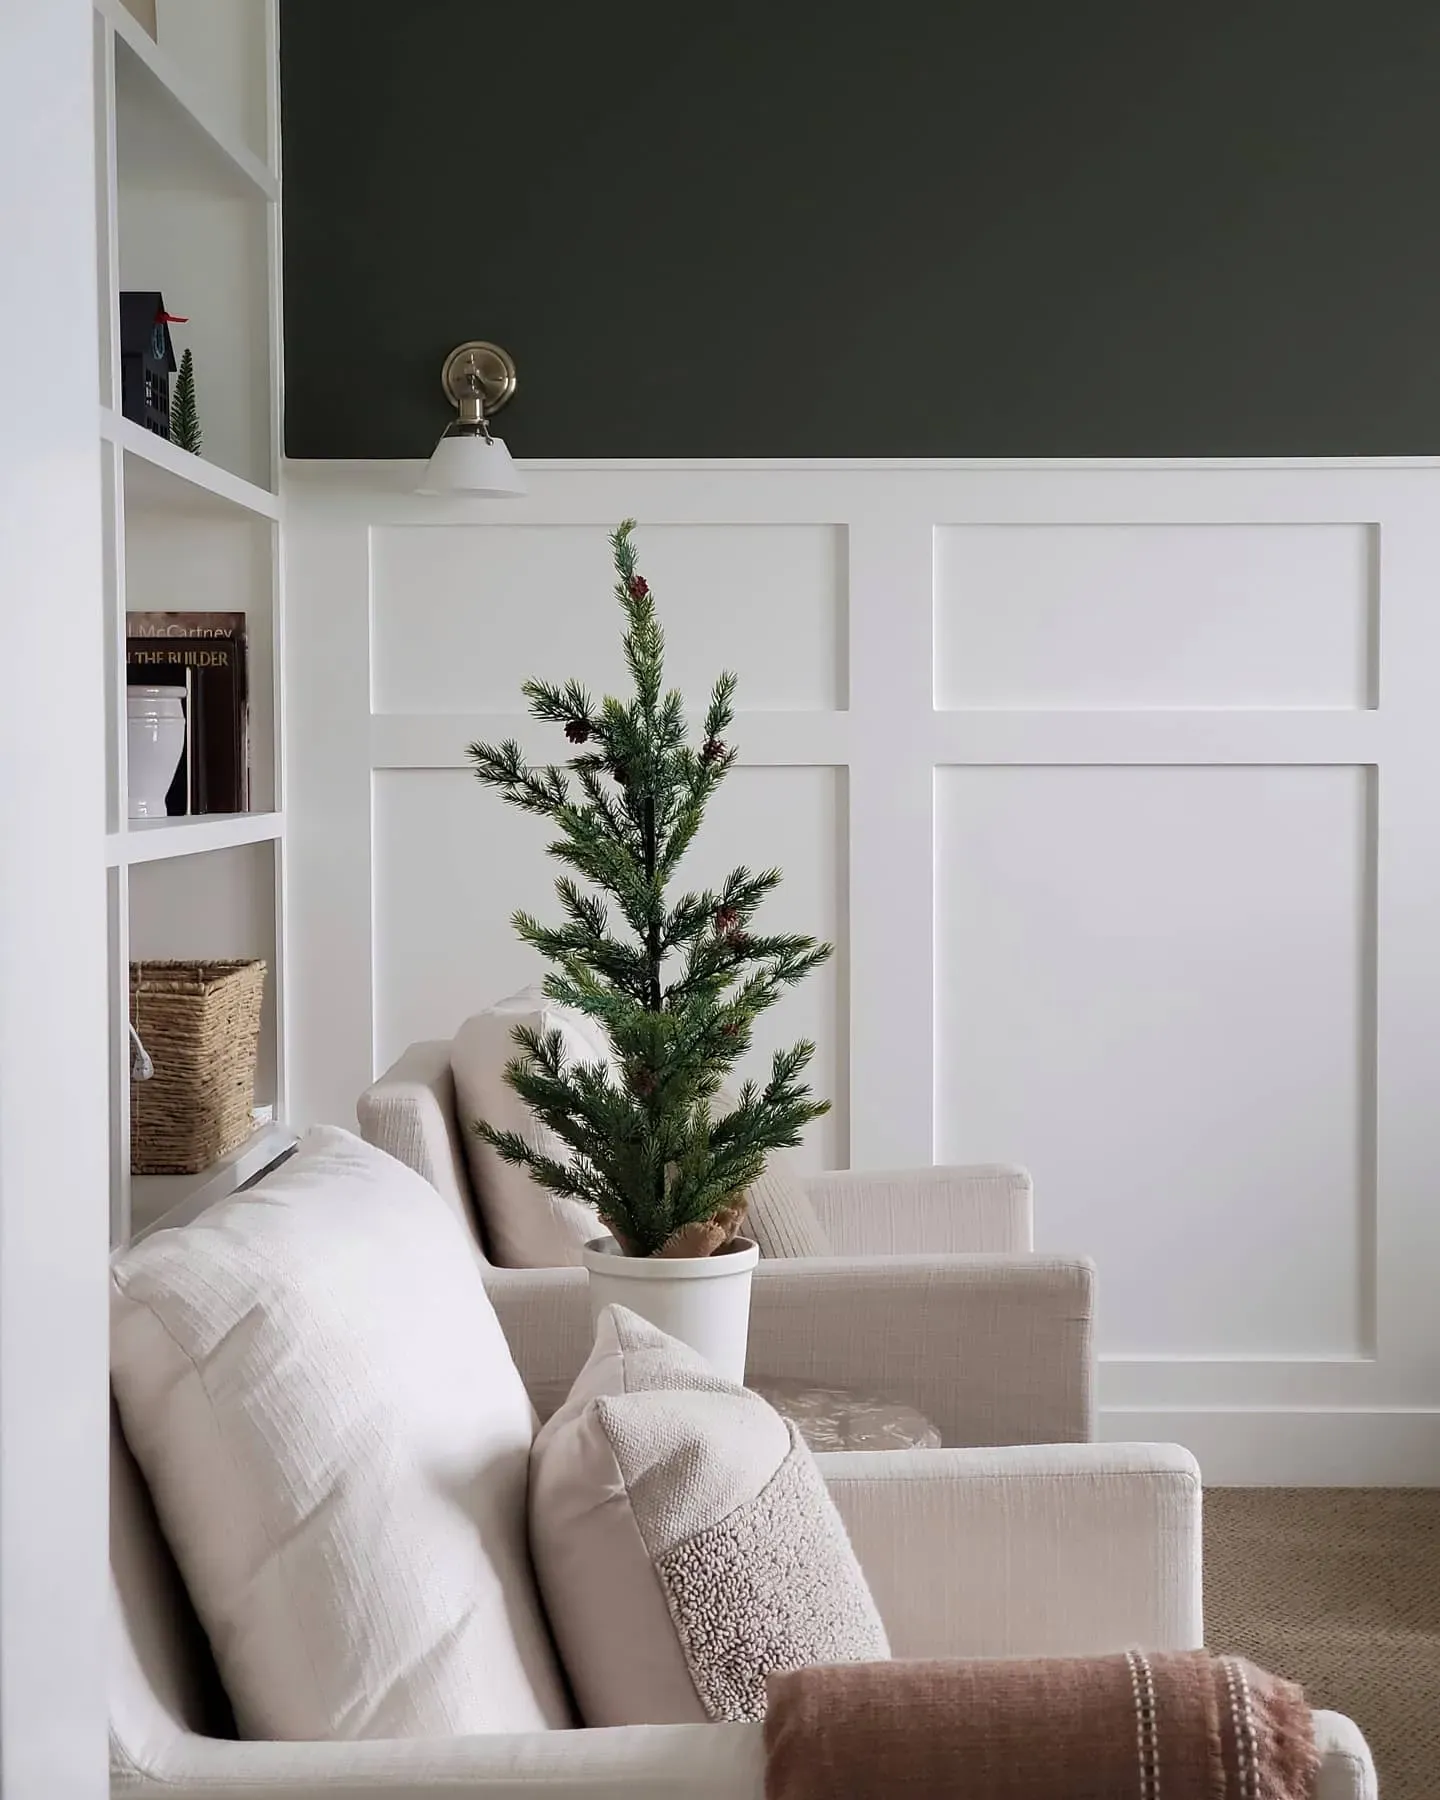 SW Roycroft Bronze Green living room color review